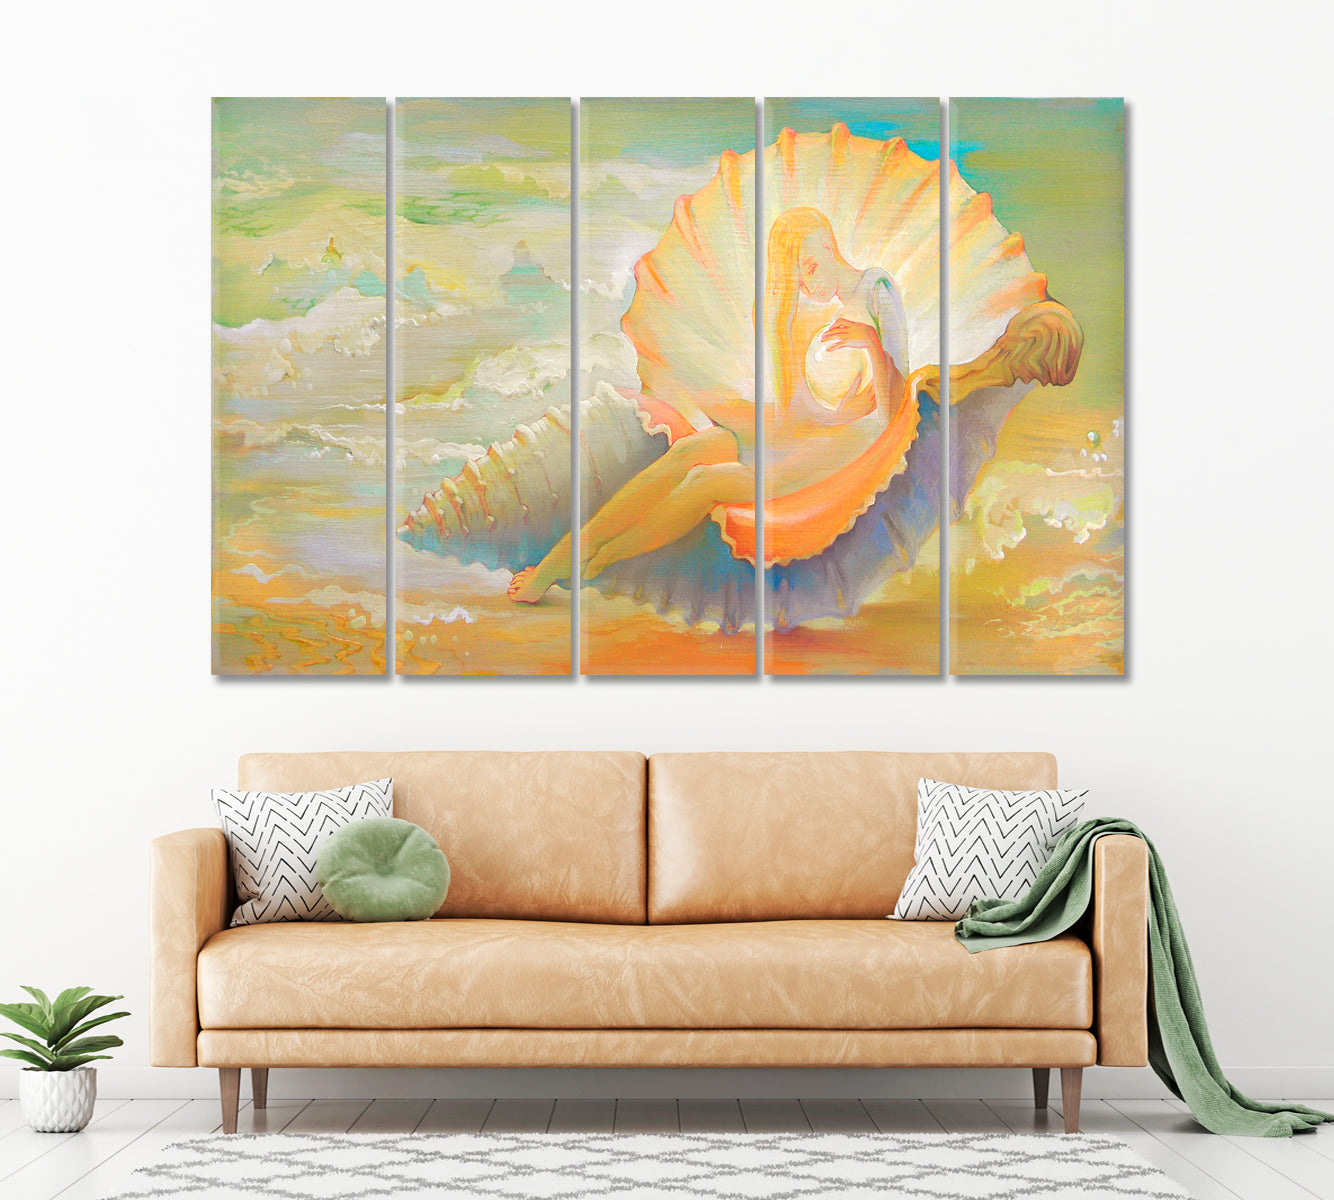 Princess of Seashell Artistic Fantastic Soft Colors Contemporary Art Artesty 5 panels 36" x 24" 